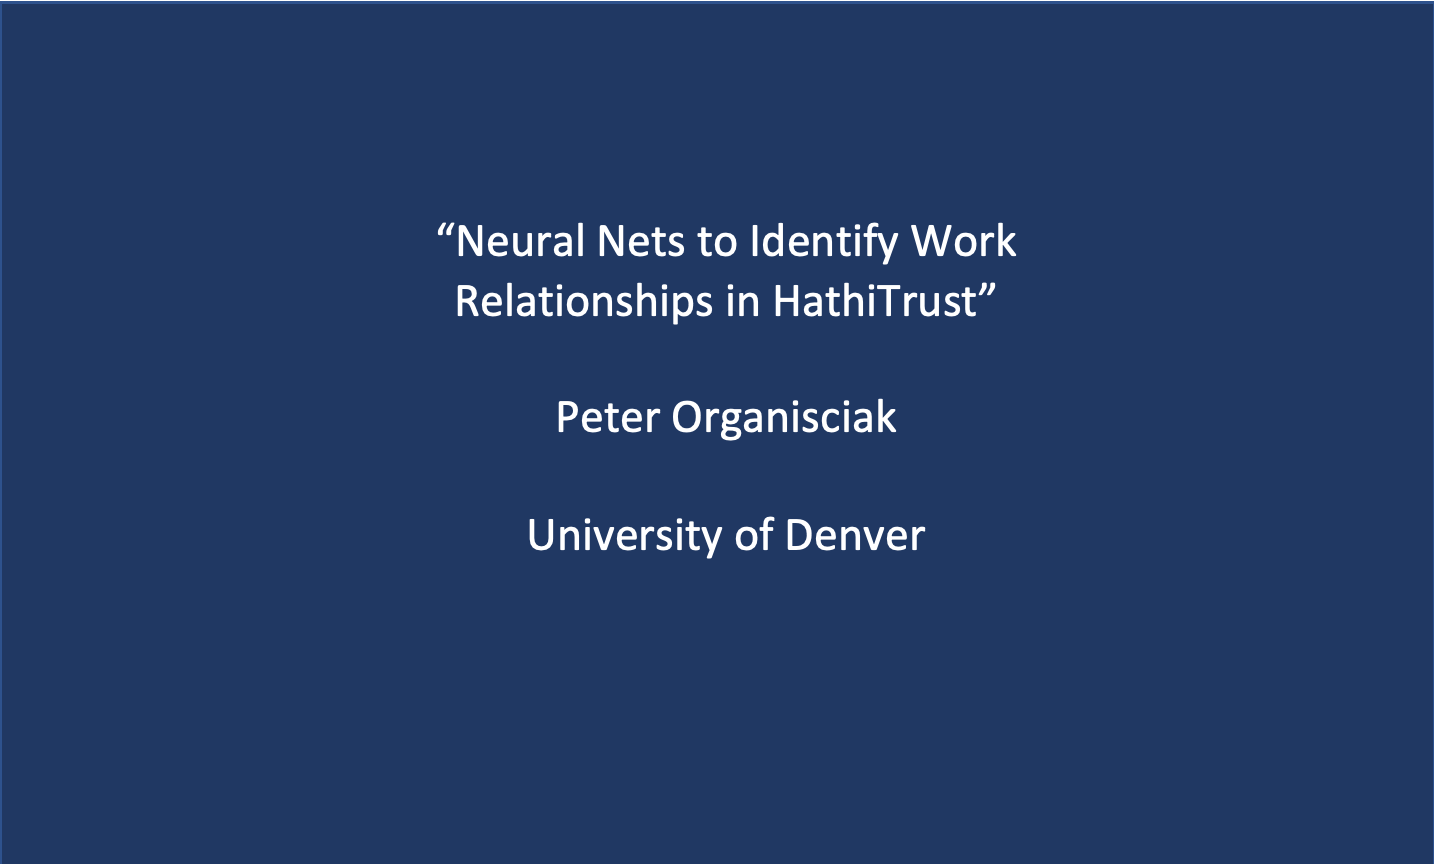 Workshop 5: Peter Organisciak, ‘Neural Nets to Identify Work Relationships in HathiTrust’